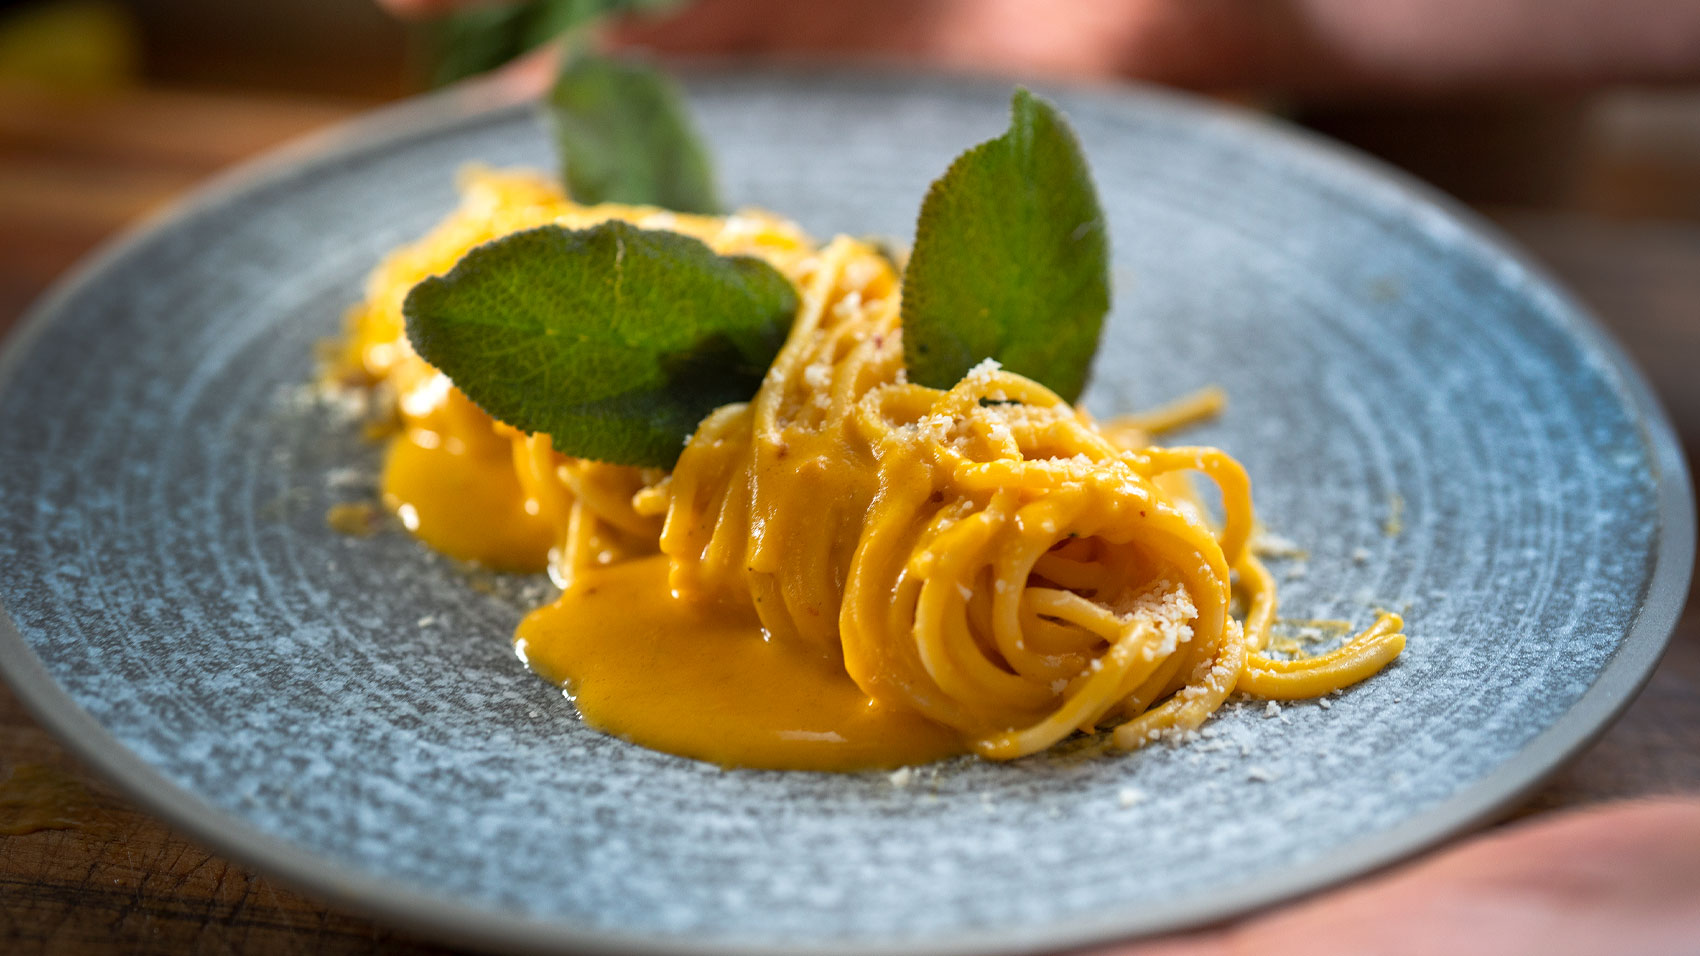 Sicilian spaghetti - Easy Meals with Video Recipes by Chef Joel Mielle -  RECIPE30